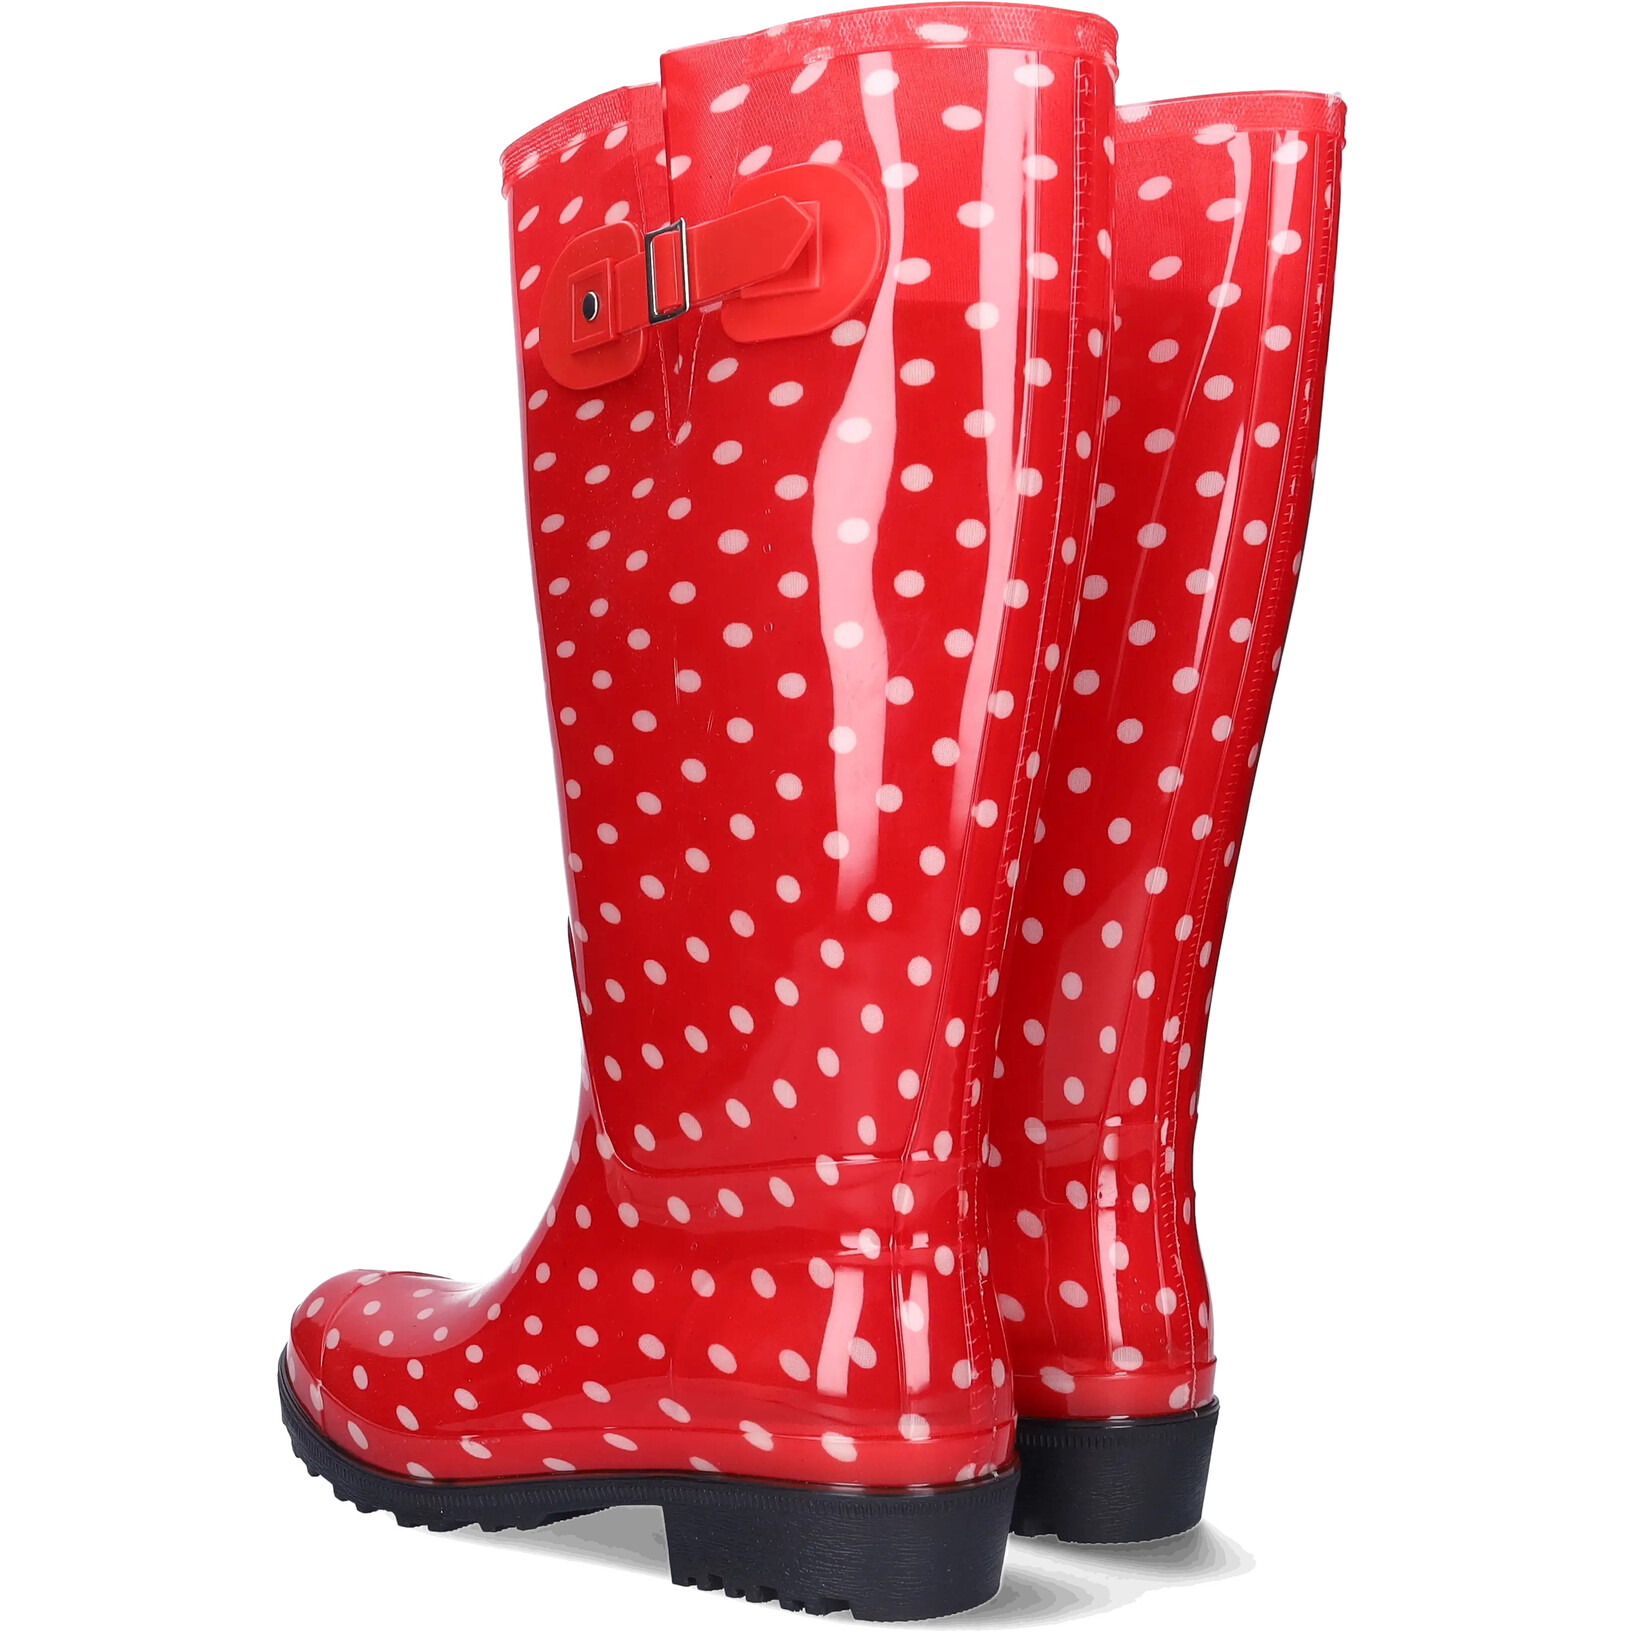 JJ Footwear Wellies - Rot/weiße Polka Dots